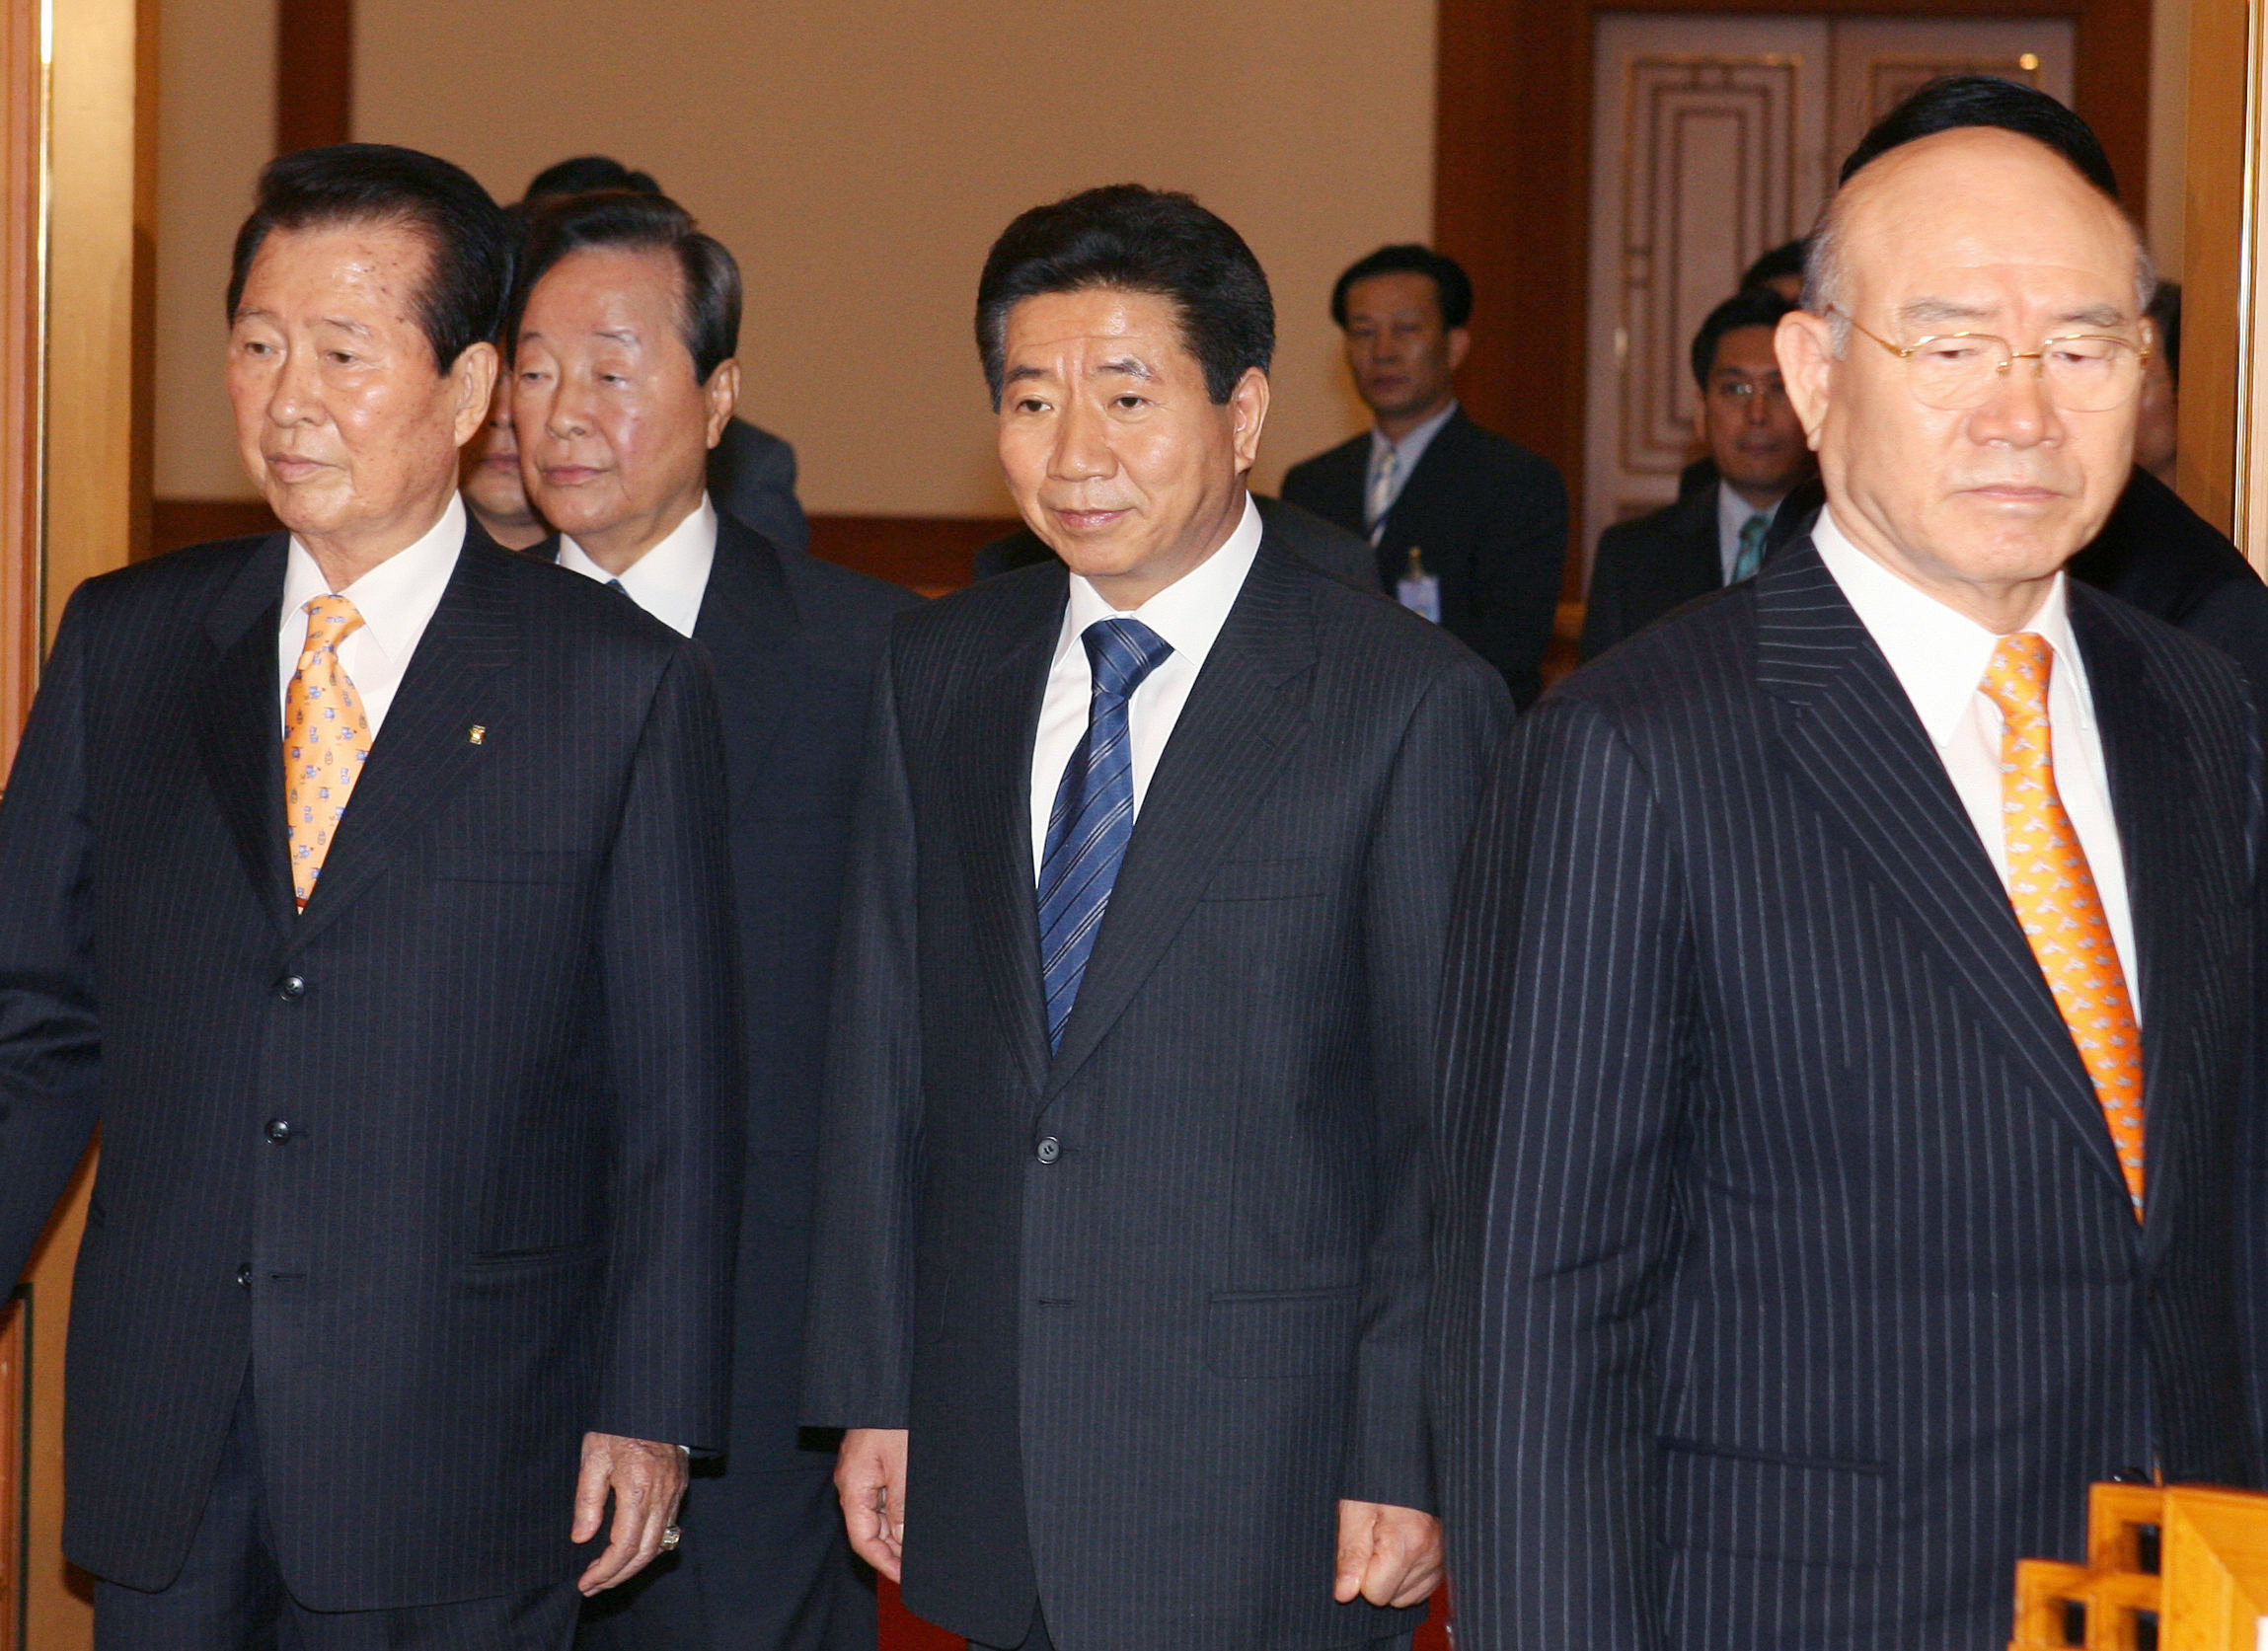 South Korean President Roh Moo-Hyun (C) walks into a room with his predecessors Kim Dae-Jung (L), Kim Young-Sam (2L) and Chun Doo-Hwan (R)